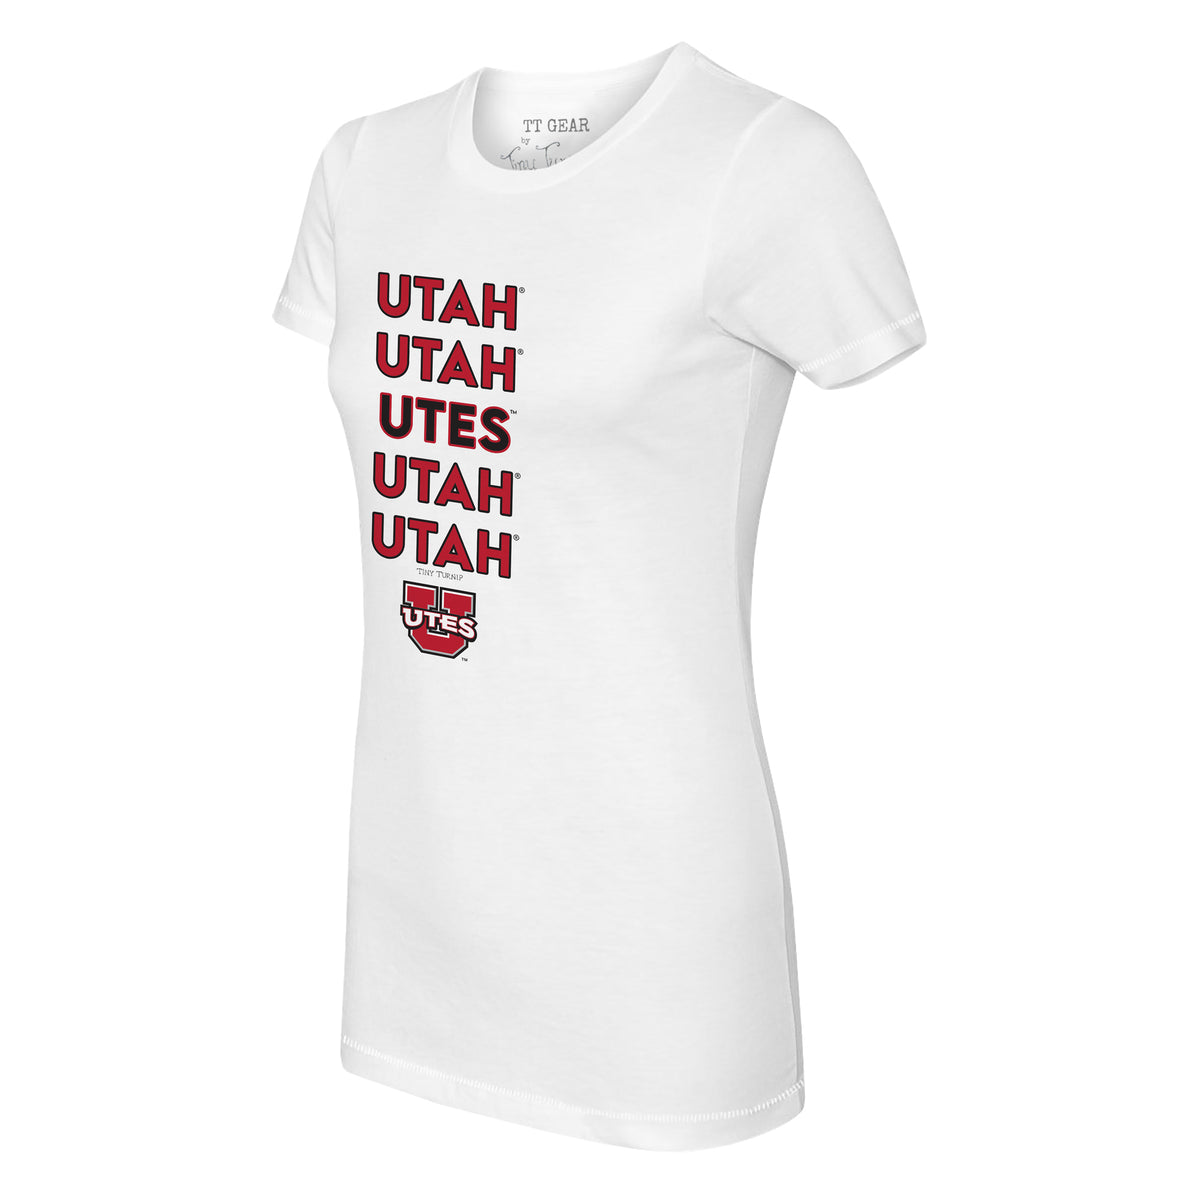 Utah Utes Stacked Tee Shirt